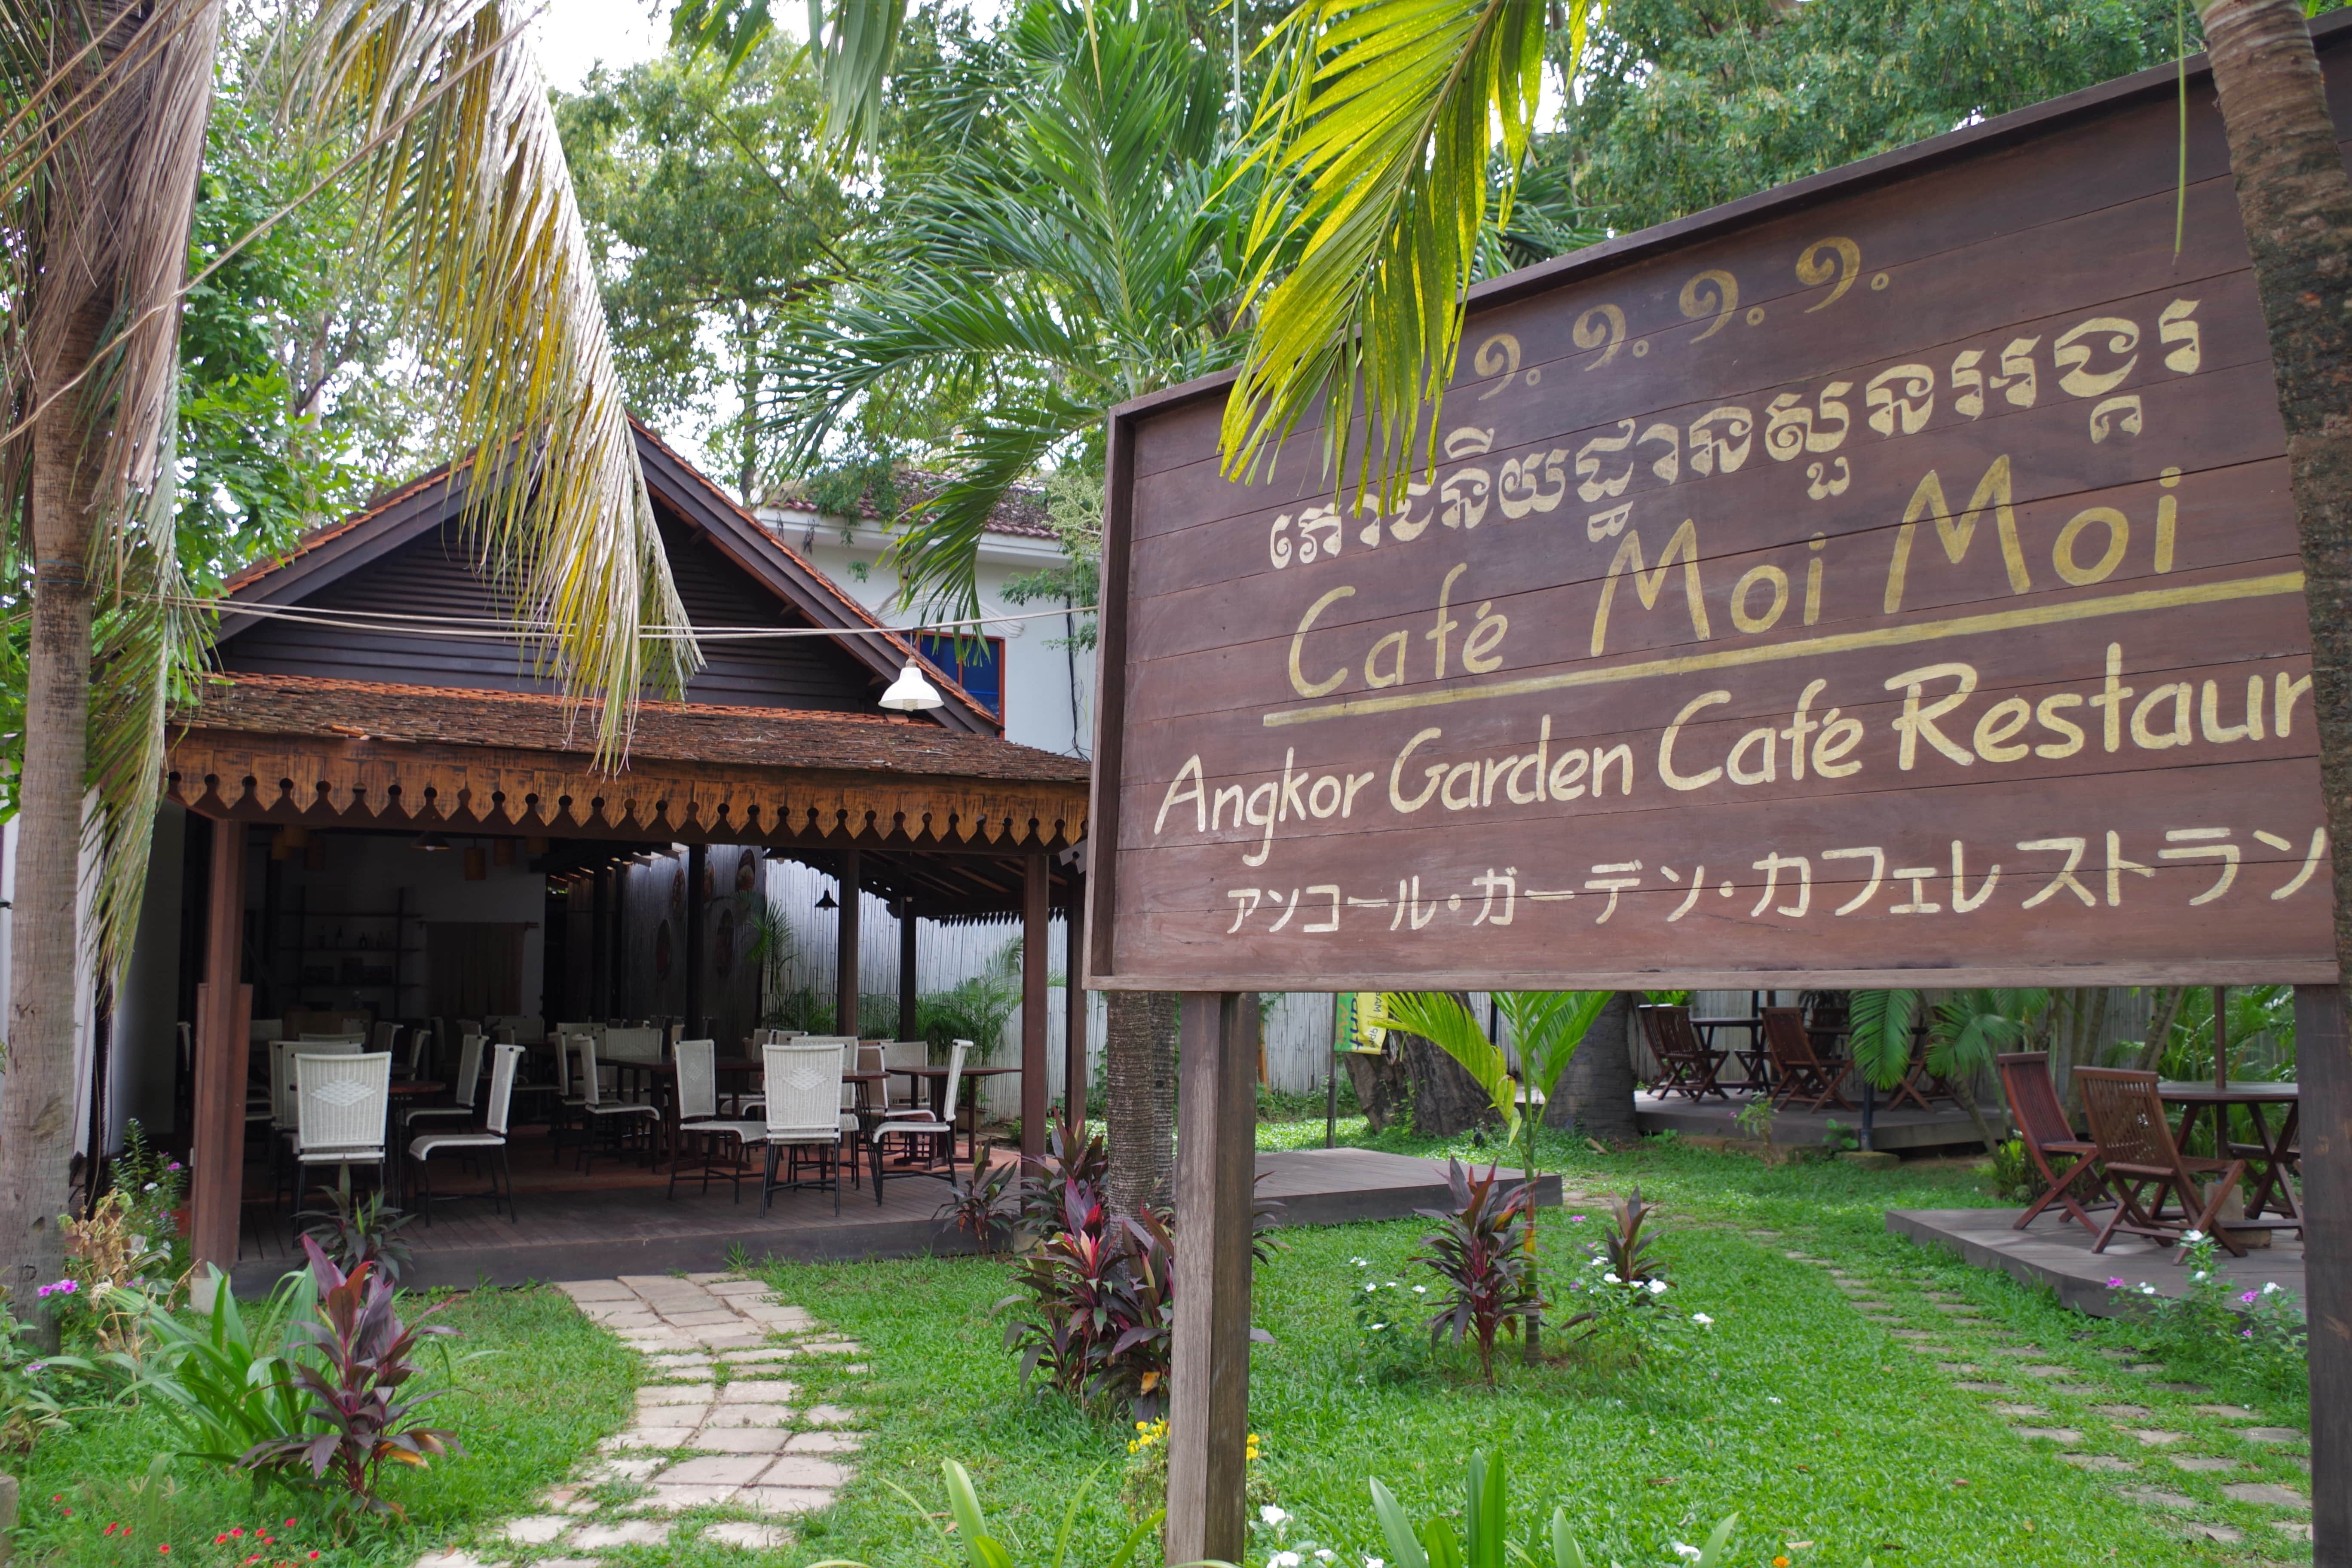 Cafe Moi Moi 花と緑あふれるカフェで過ごす穏やかな時間 カンボジア旅行 観光 お土産等の総合情報サイト Nyonyum ニョニュム